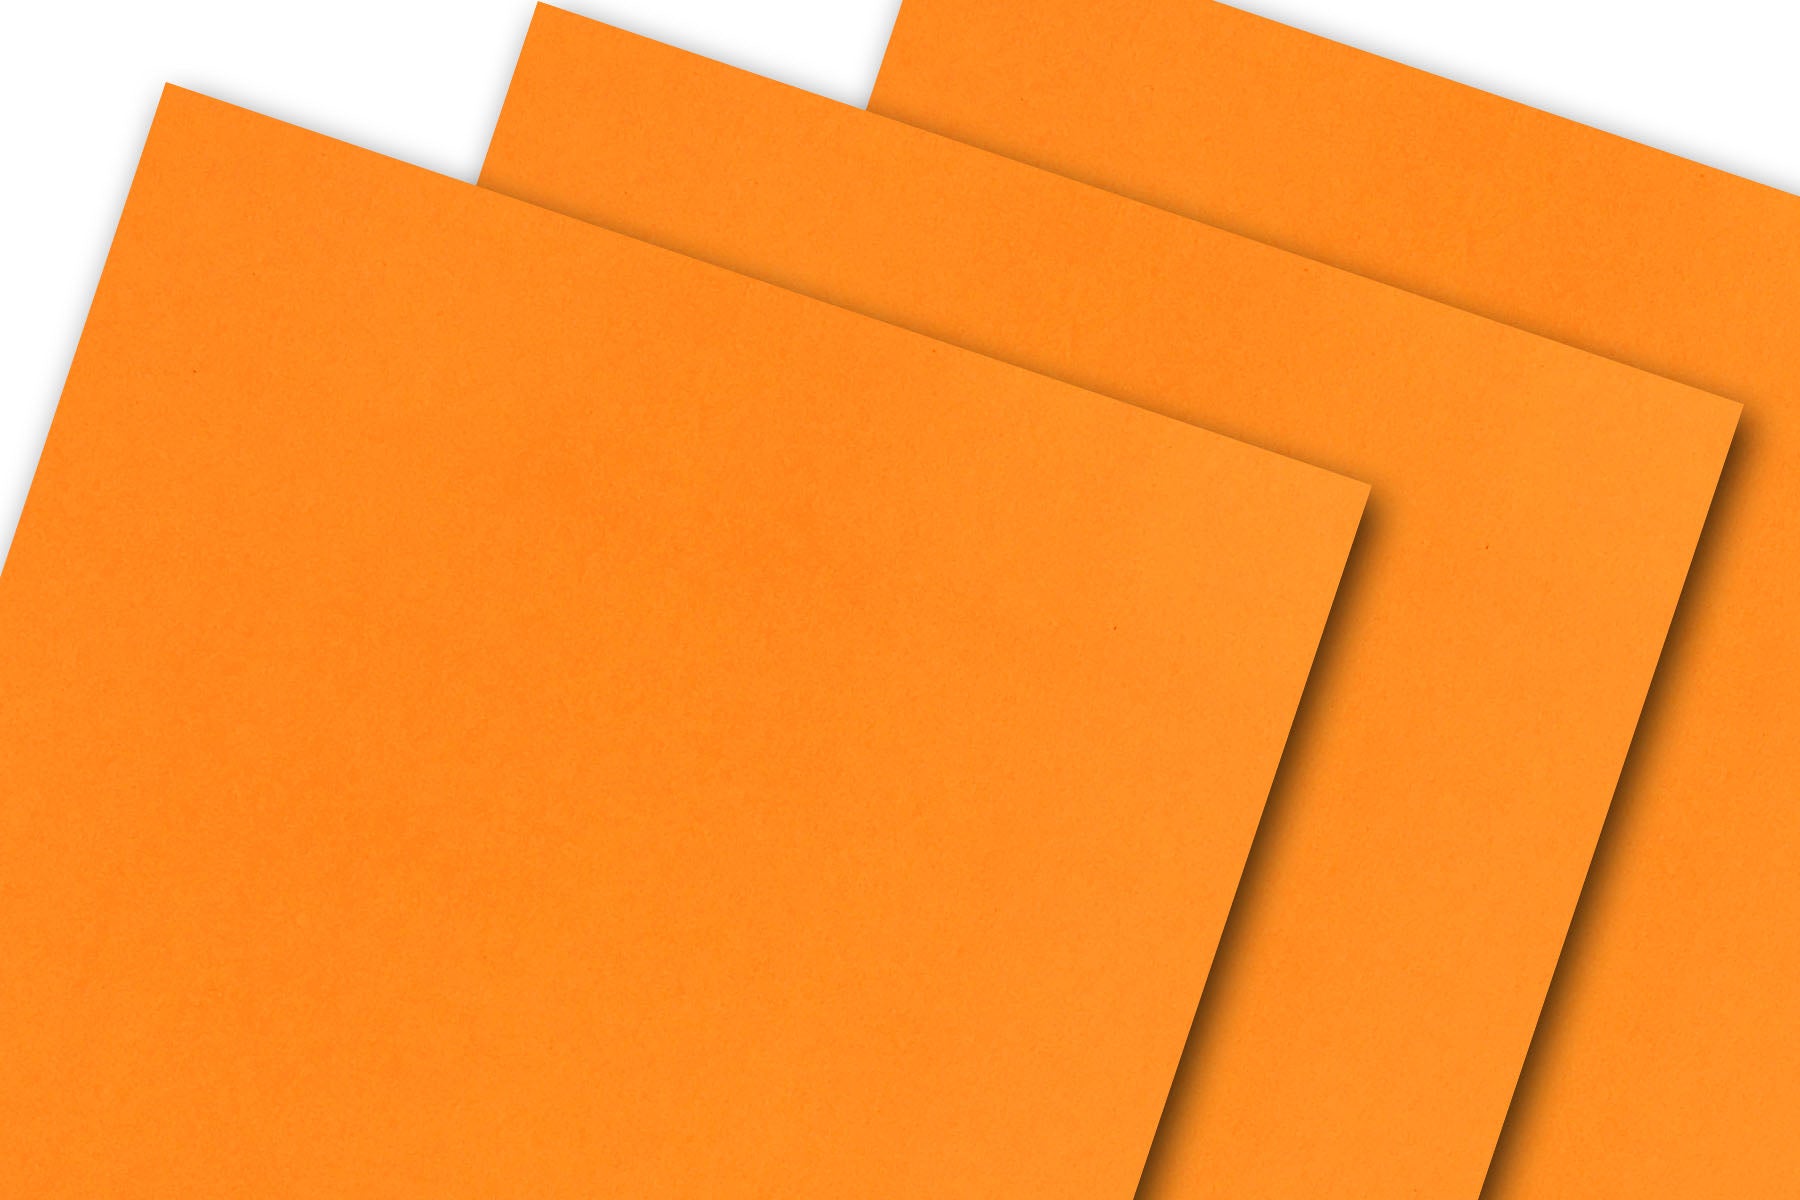 Bright Color Card Stock Paper, 65lb. 8.5 X 11 Inches (Sun Yellow)